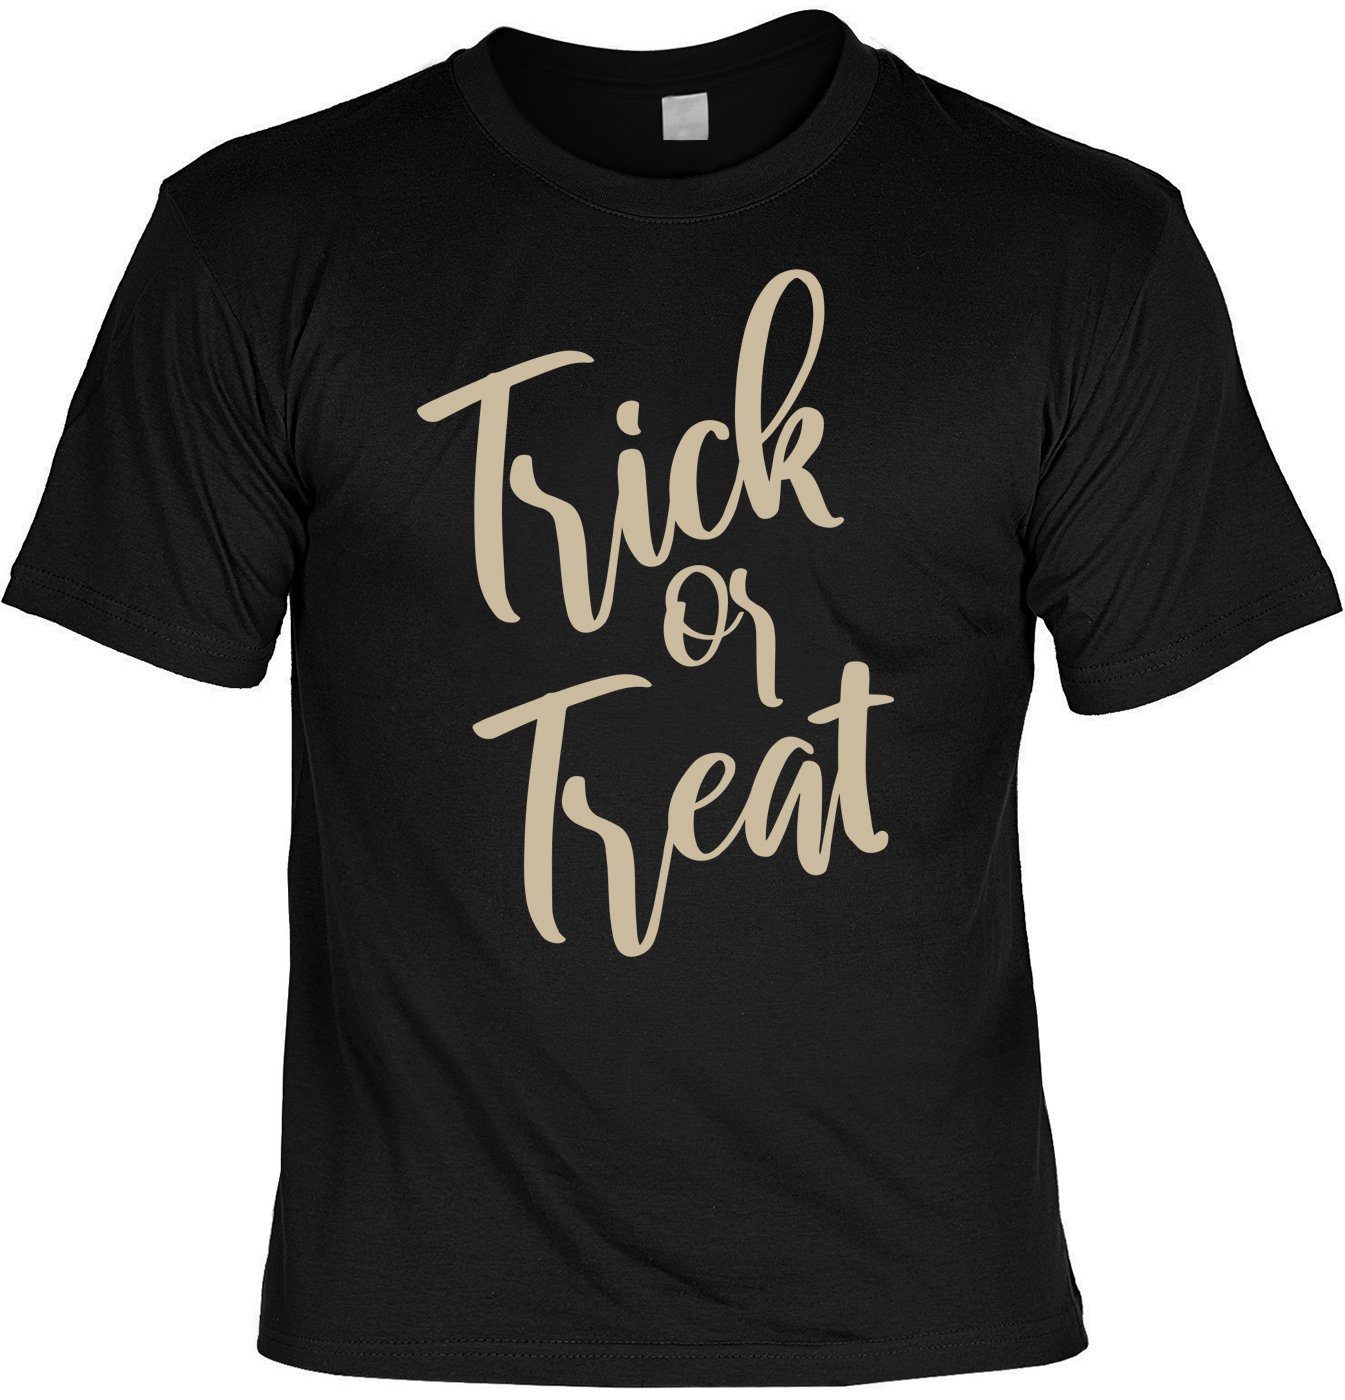 Art & Detail Shirt T-Shirt Halloween Grusel Tshirt Trick or Treat - Kürbis Halloween, Party